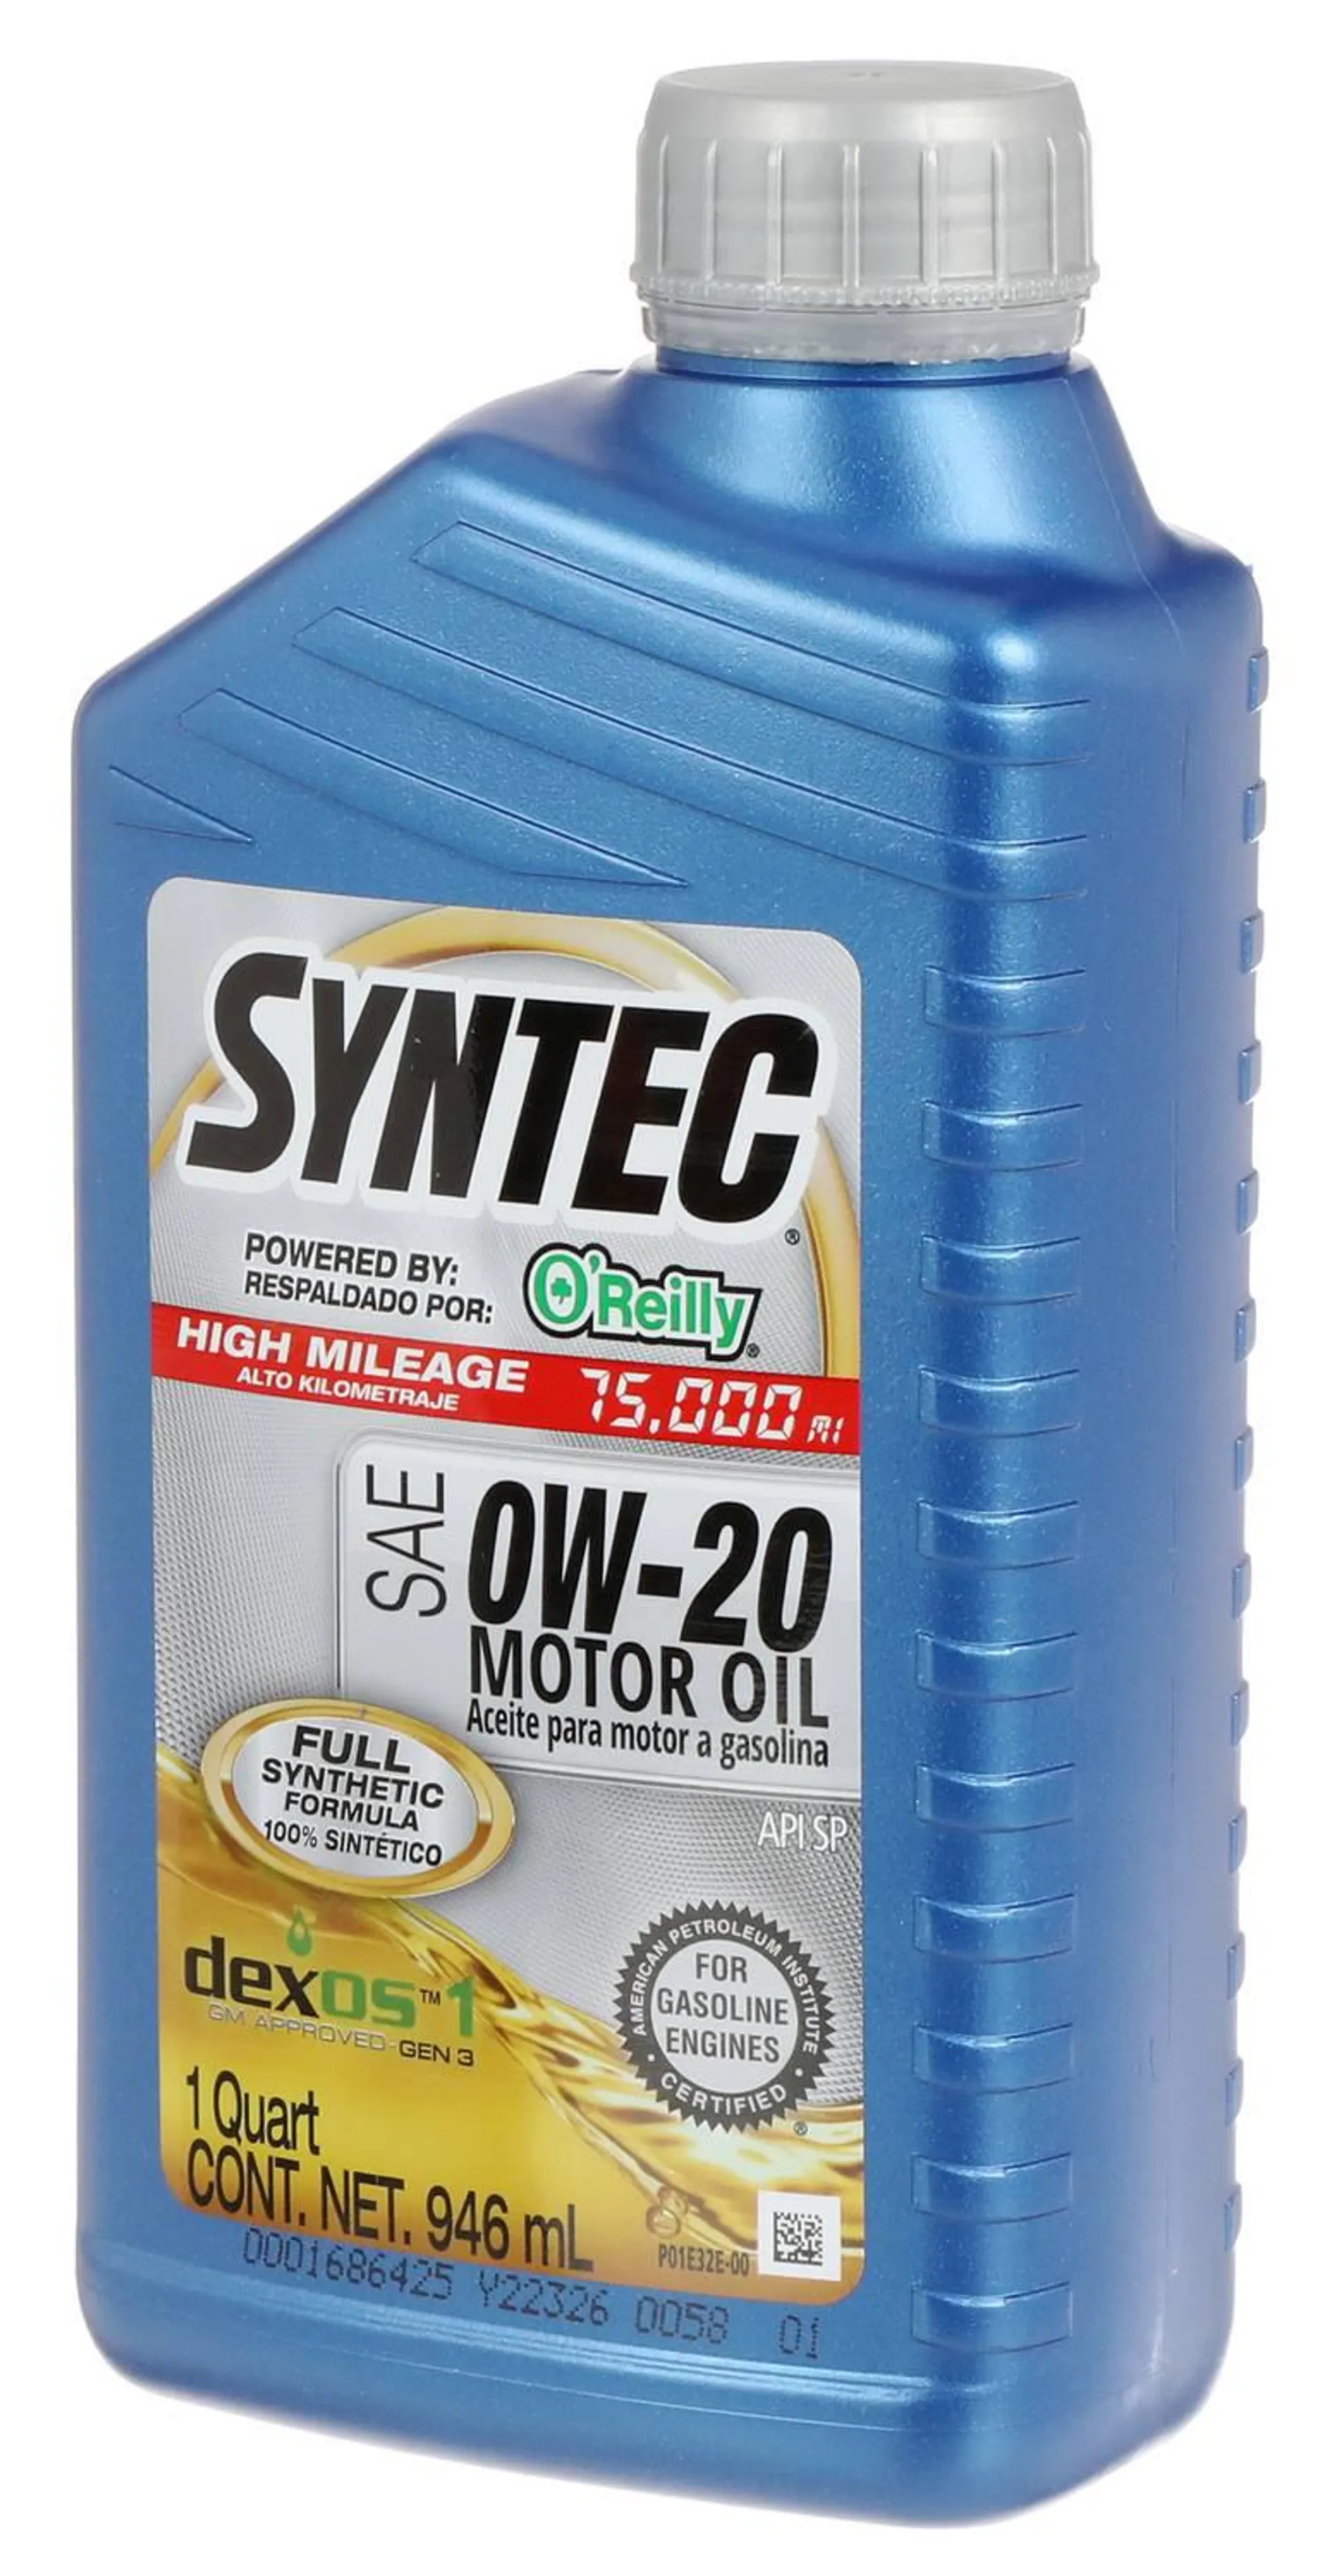 SYNTEC Full Synthetic Motor Oil 0W-20 - HI-SYN0-20